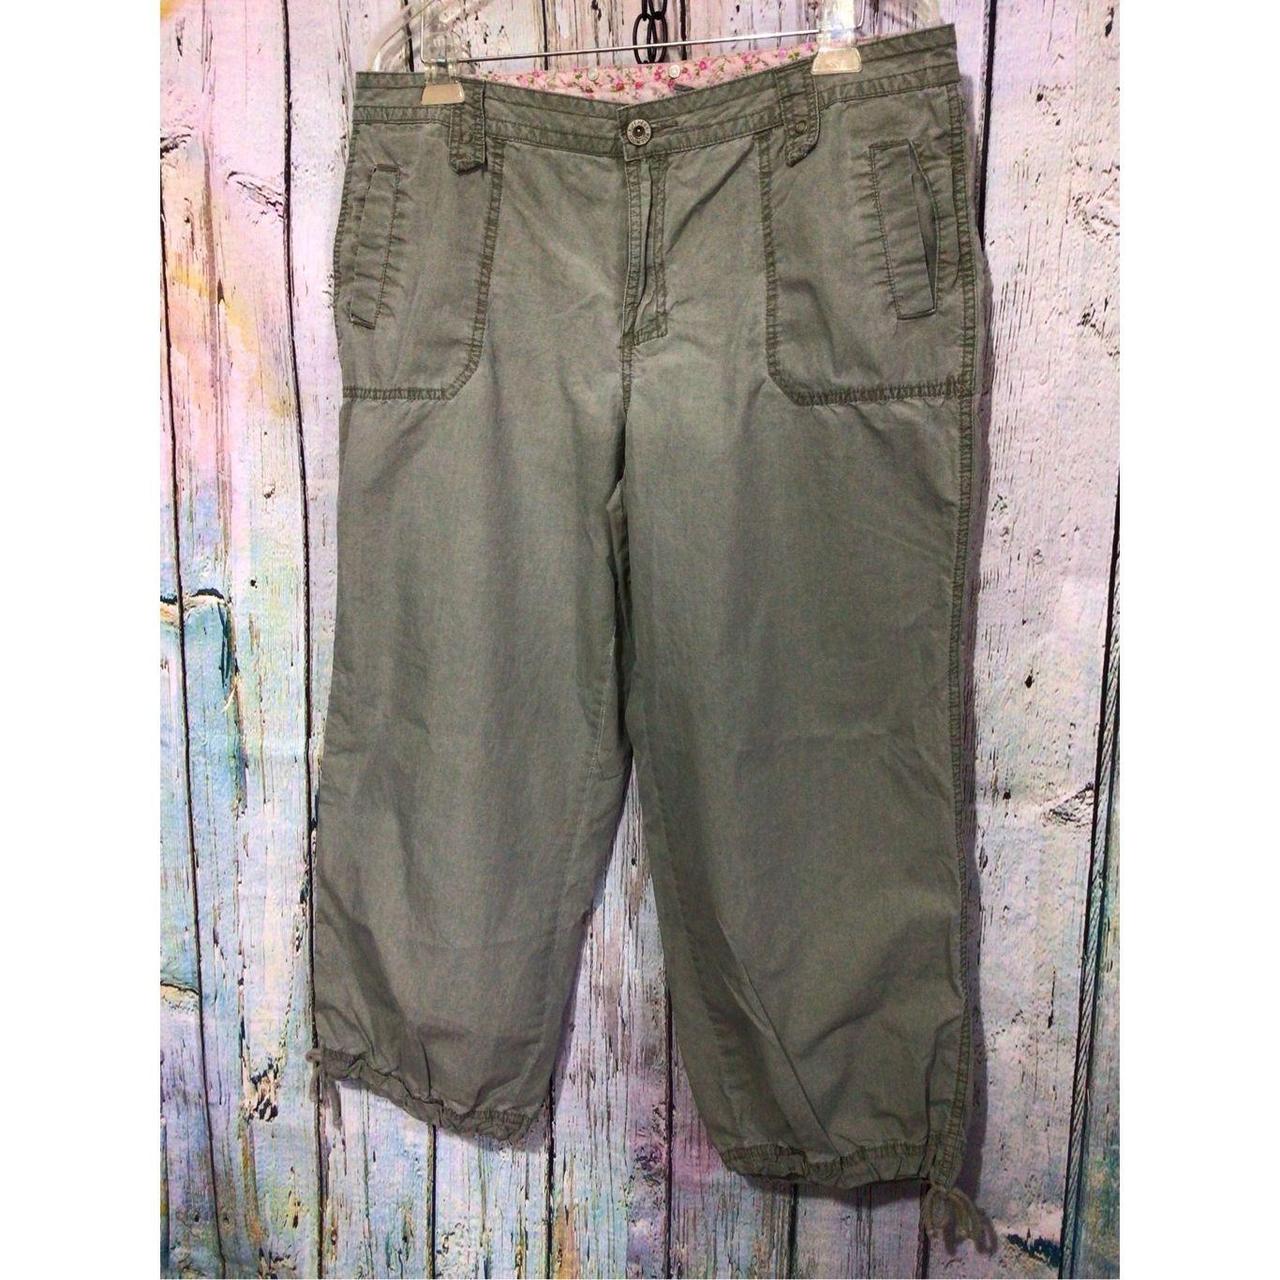 Buy Quadro Pants Medio Quadro Fatigue Pants Light Olive Green Pants Size  W30x26.5 Online in India - Etsy